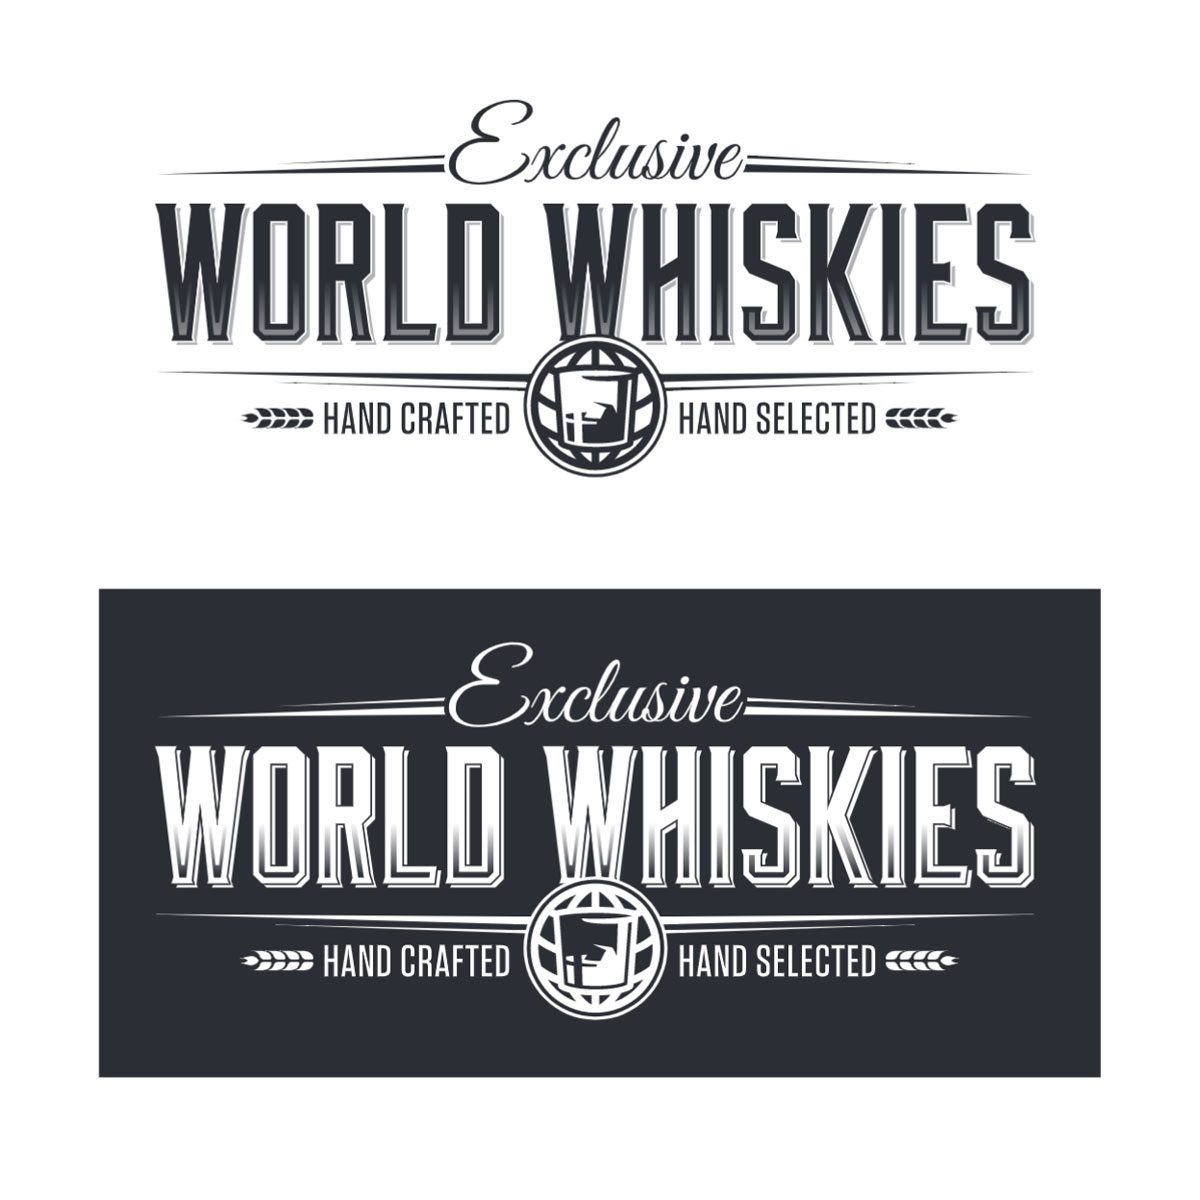 Jim Beam whiskey logo design